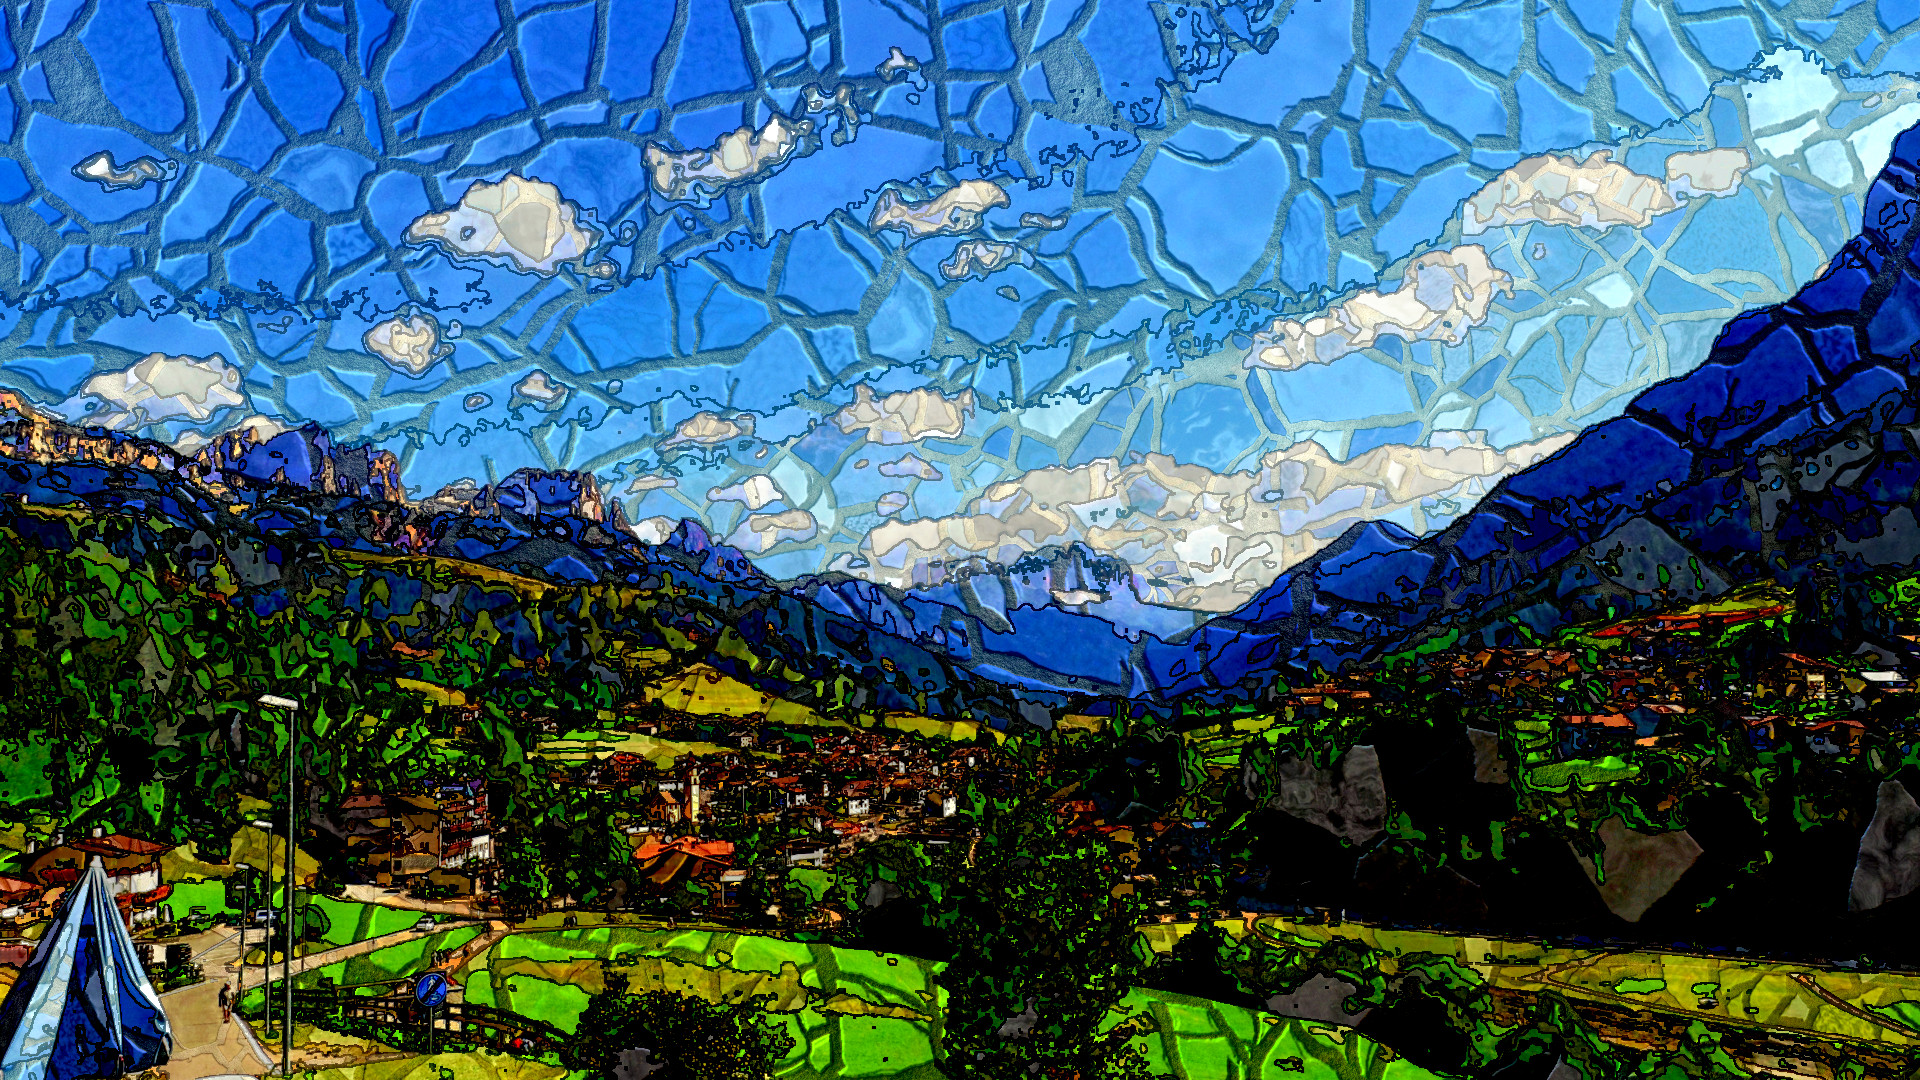 2019-04-07 14-41-30 Dolomiti_2012_Samsung_2012-07-08_SAM_0305, as a simple stone mosaic, on 30 areas, nuance=Mix.jpg